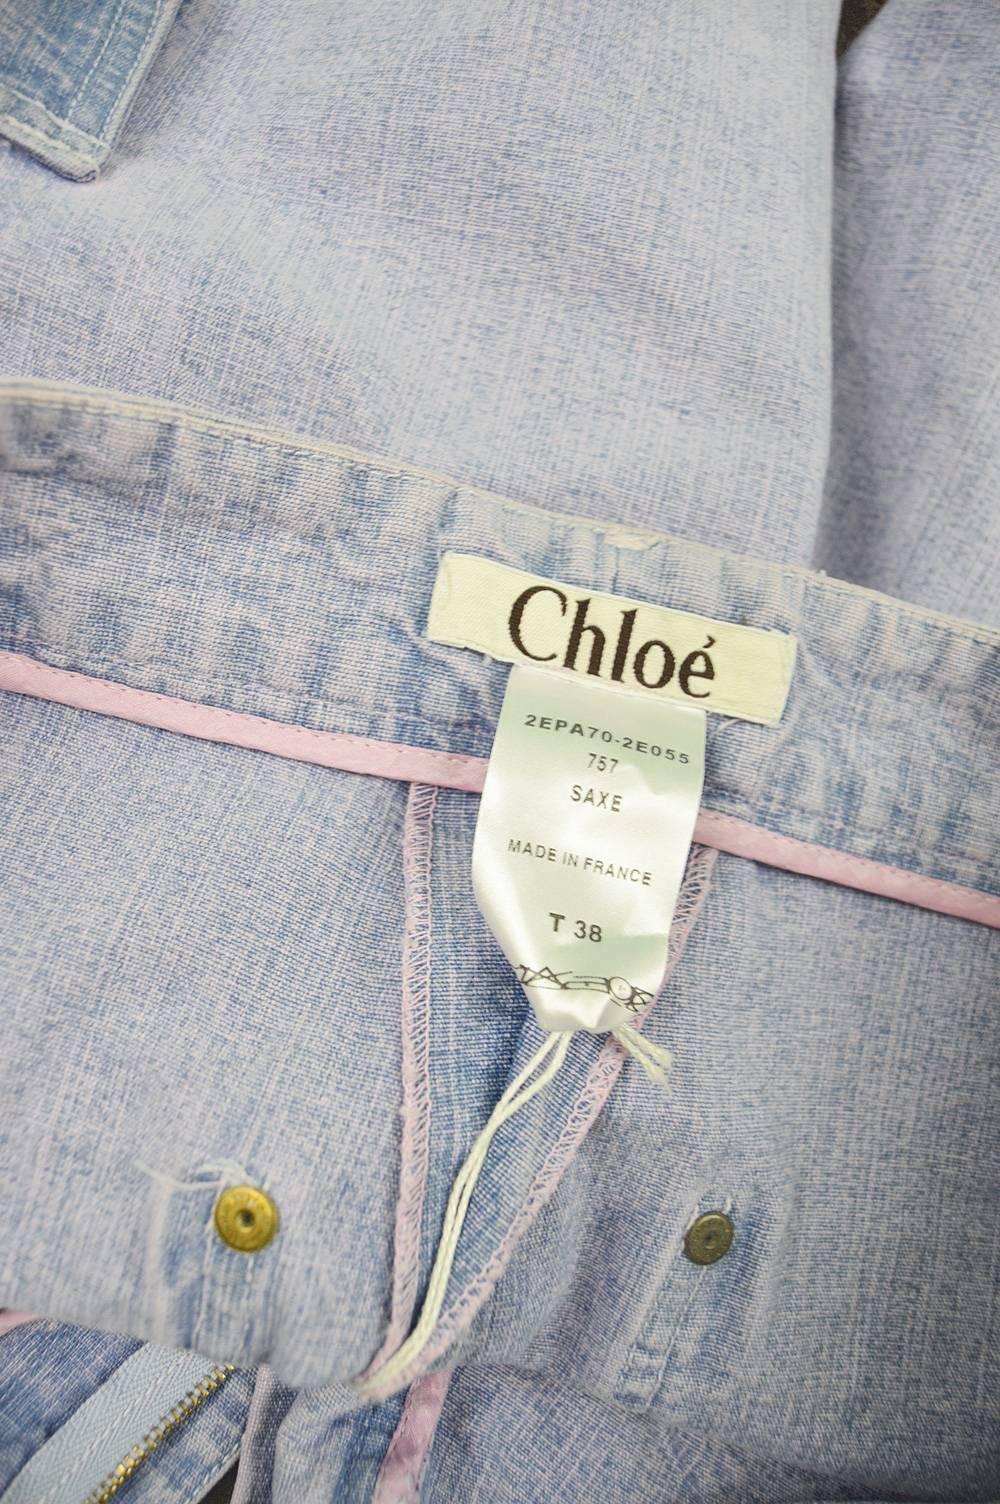 Chloé by Phoebe Philo Blue Pastel Pink Overdyed Denim Jeans / Shorts, S / S 2002 5